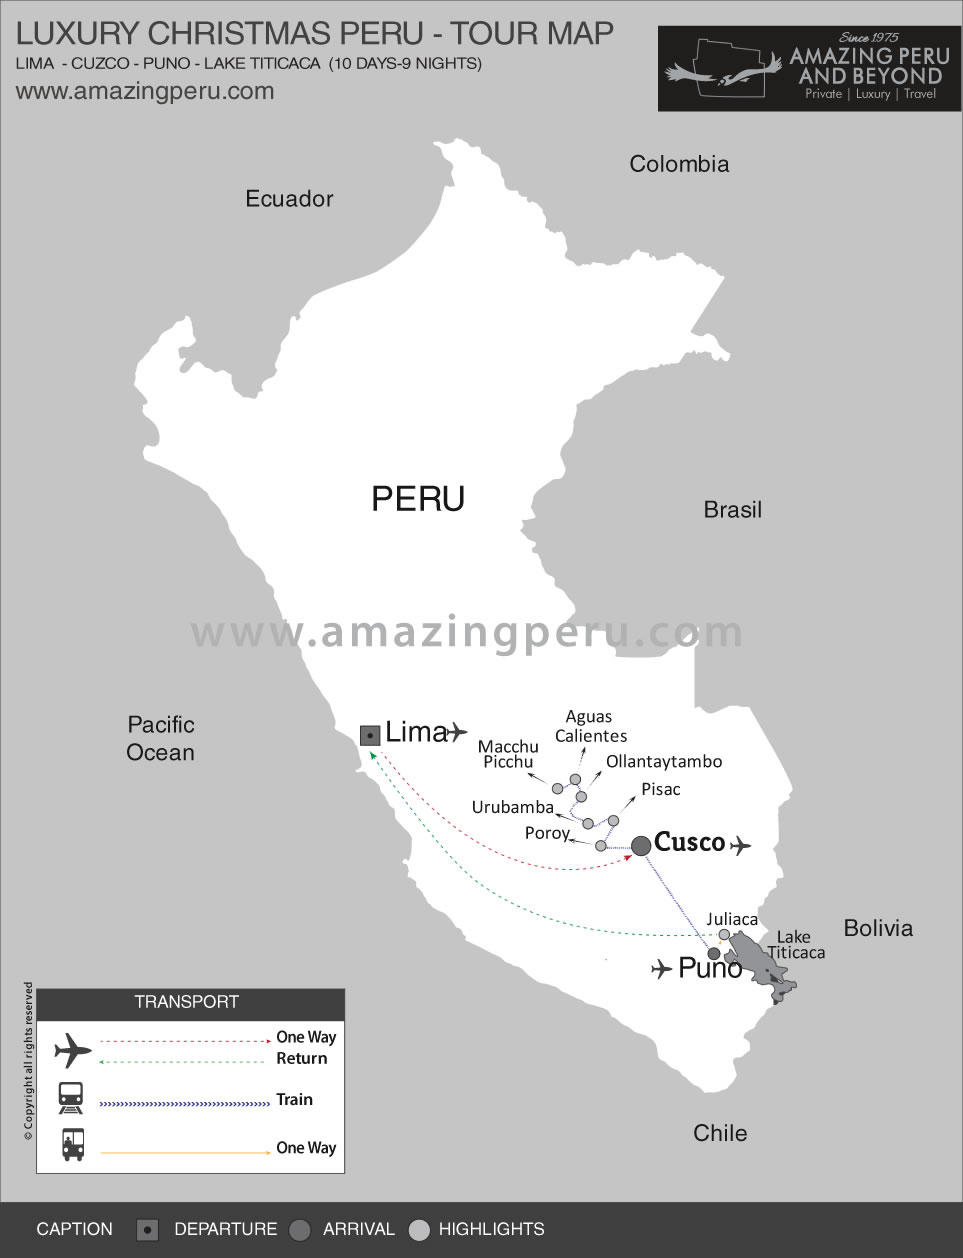 Luxury Christmas Tour to Machu Picchu 2022 - Option 1 - 10 days / 9 nights.